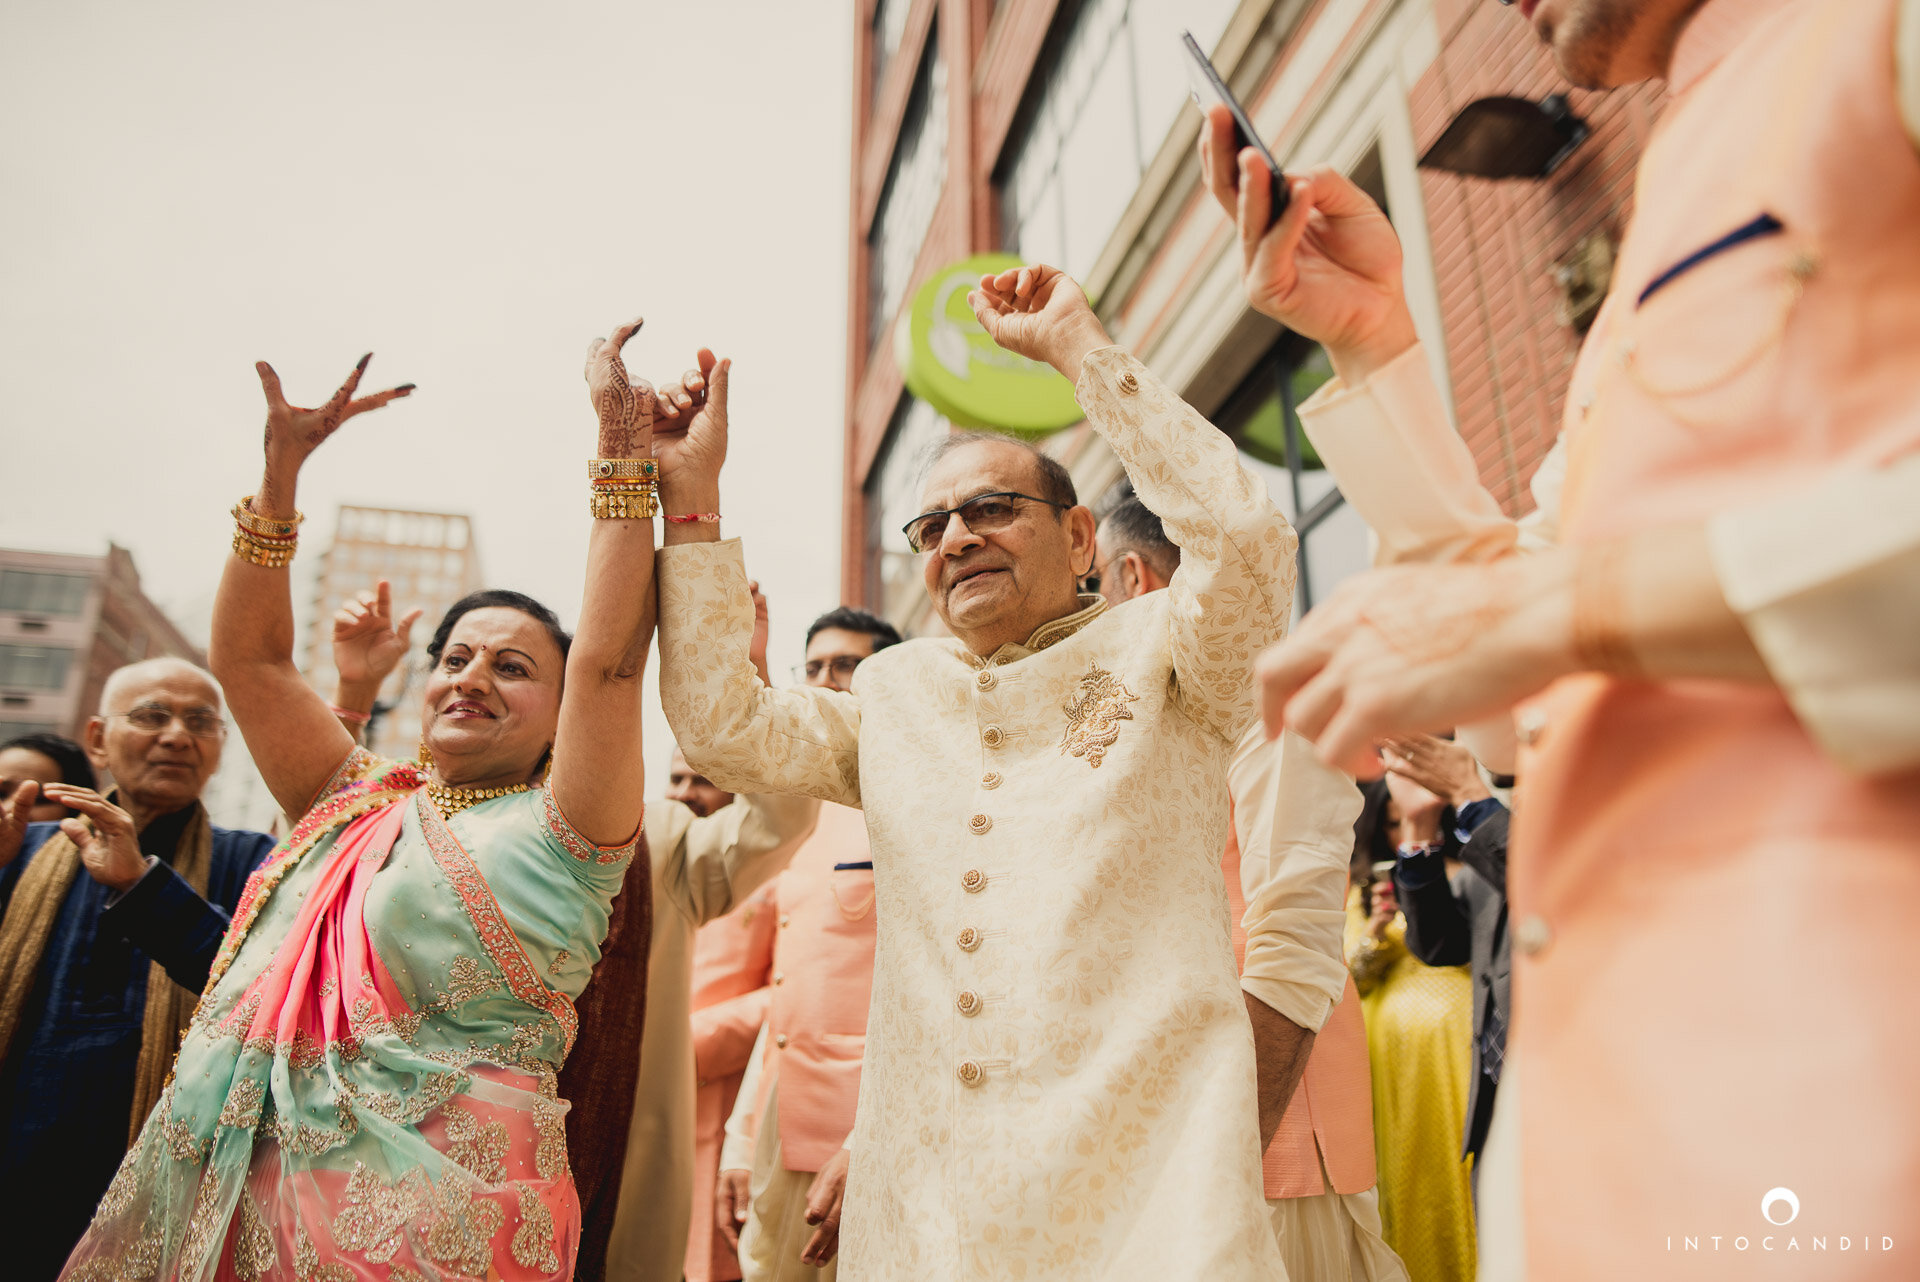 Chicago_Indian_Wedding_Photographer_Intocandid_Photography_Ketan & Manasvi_21.JPG